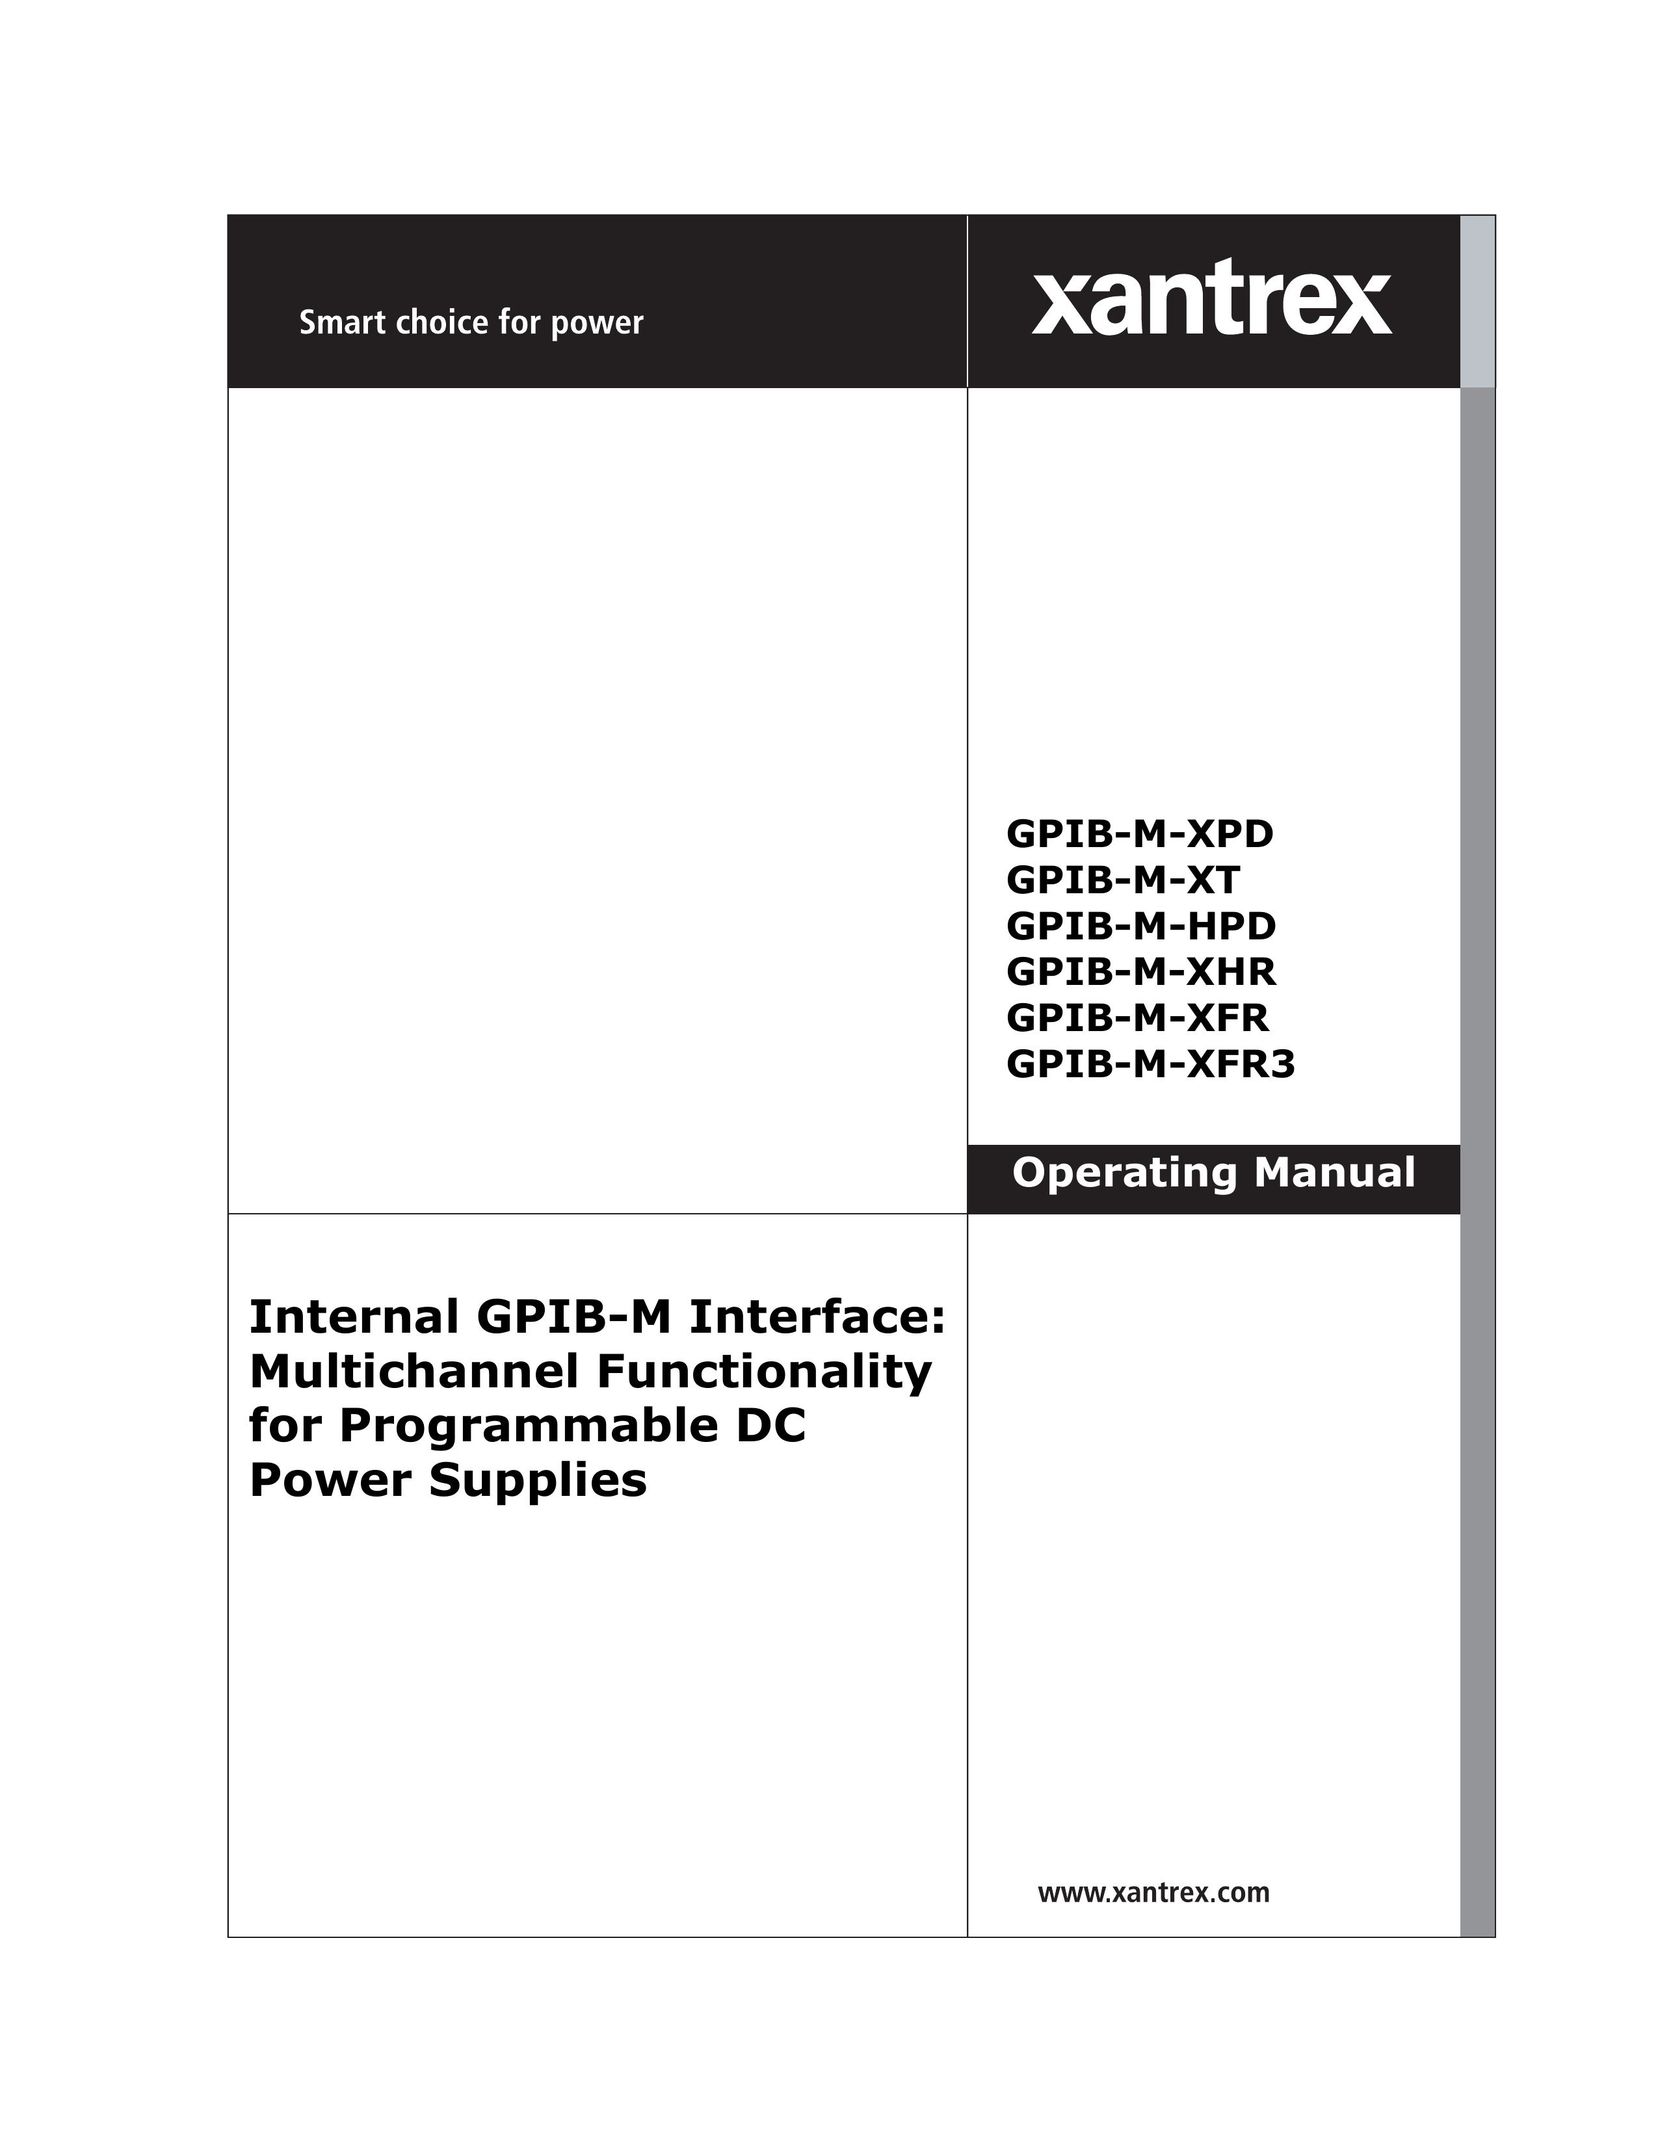 Xantrex Technology GPIB-M-XFR Power Supply User Manual